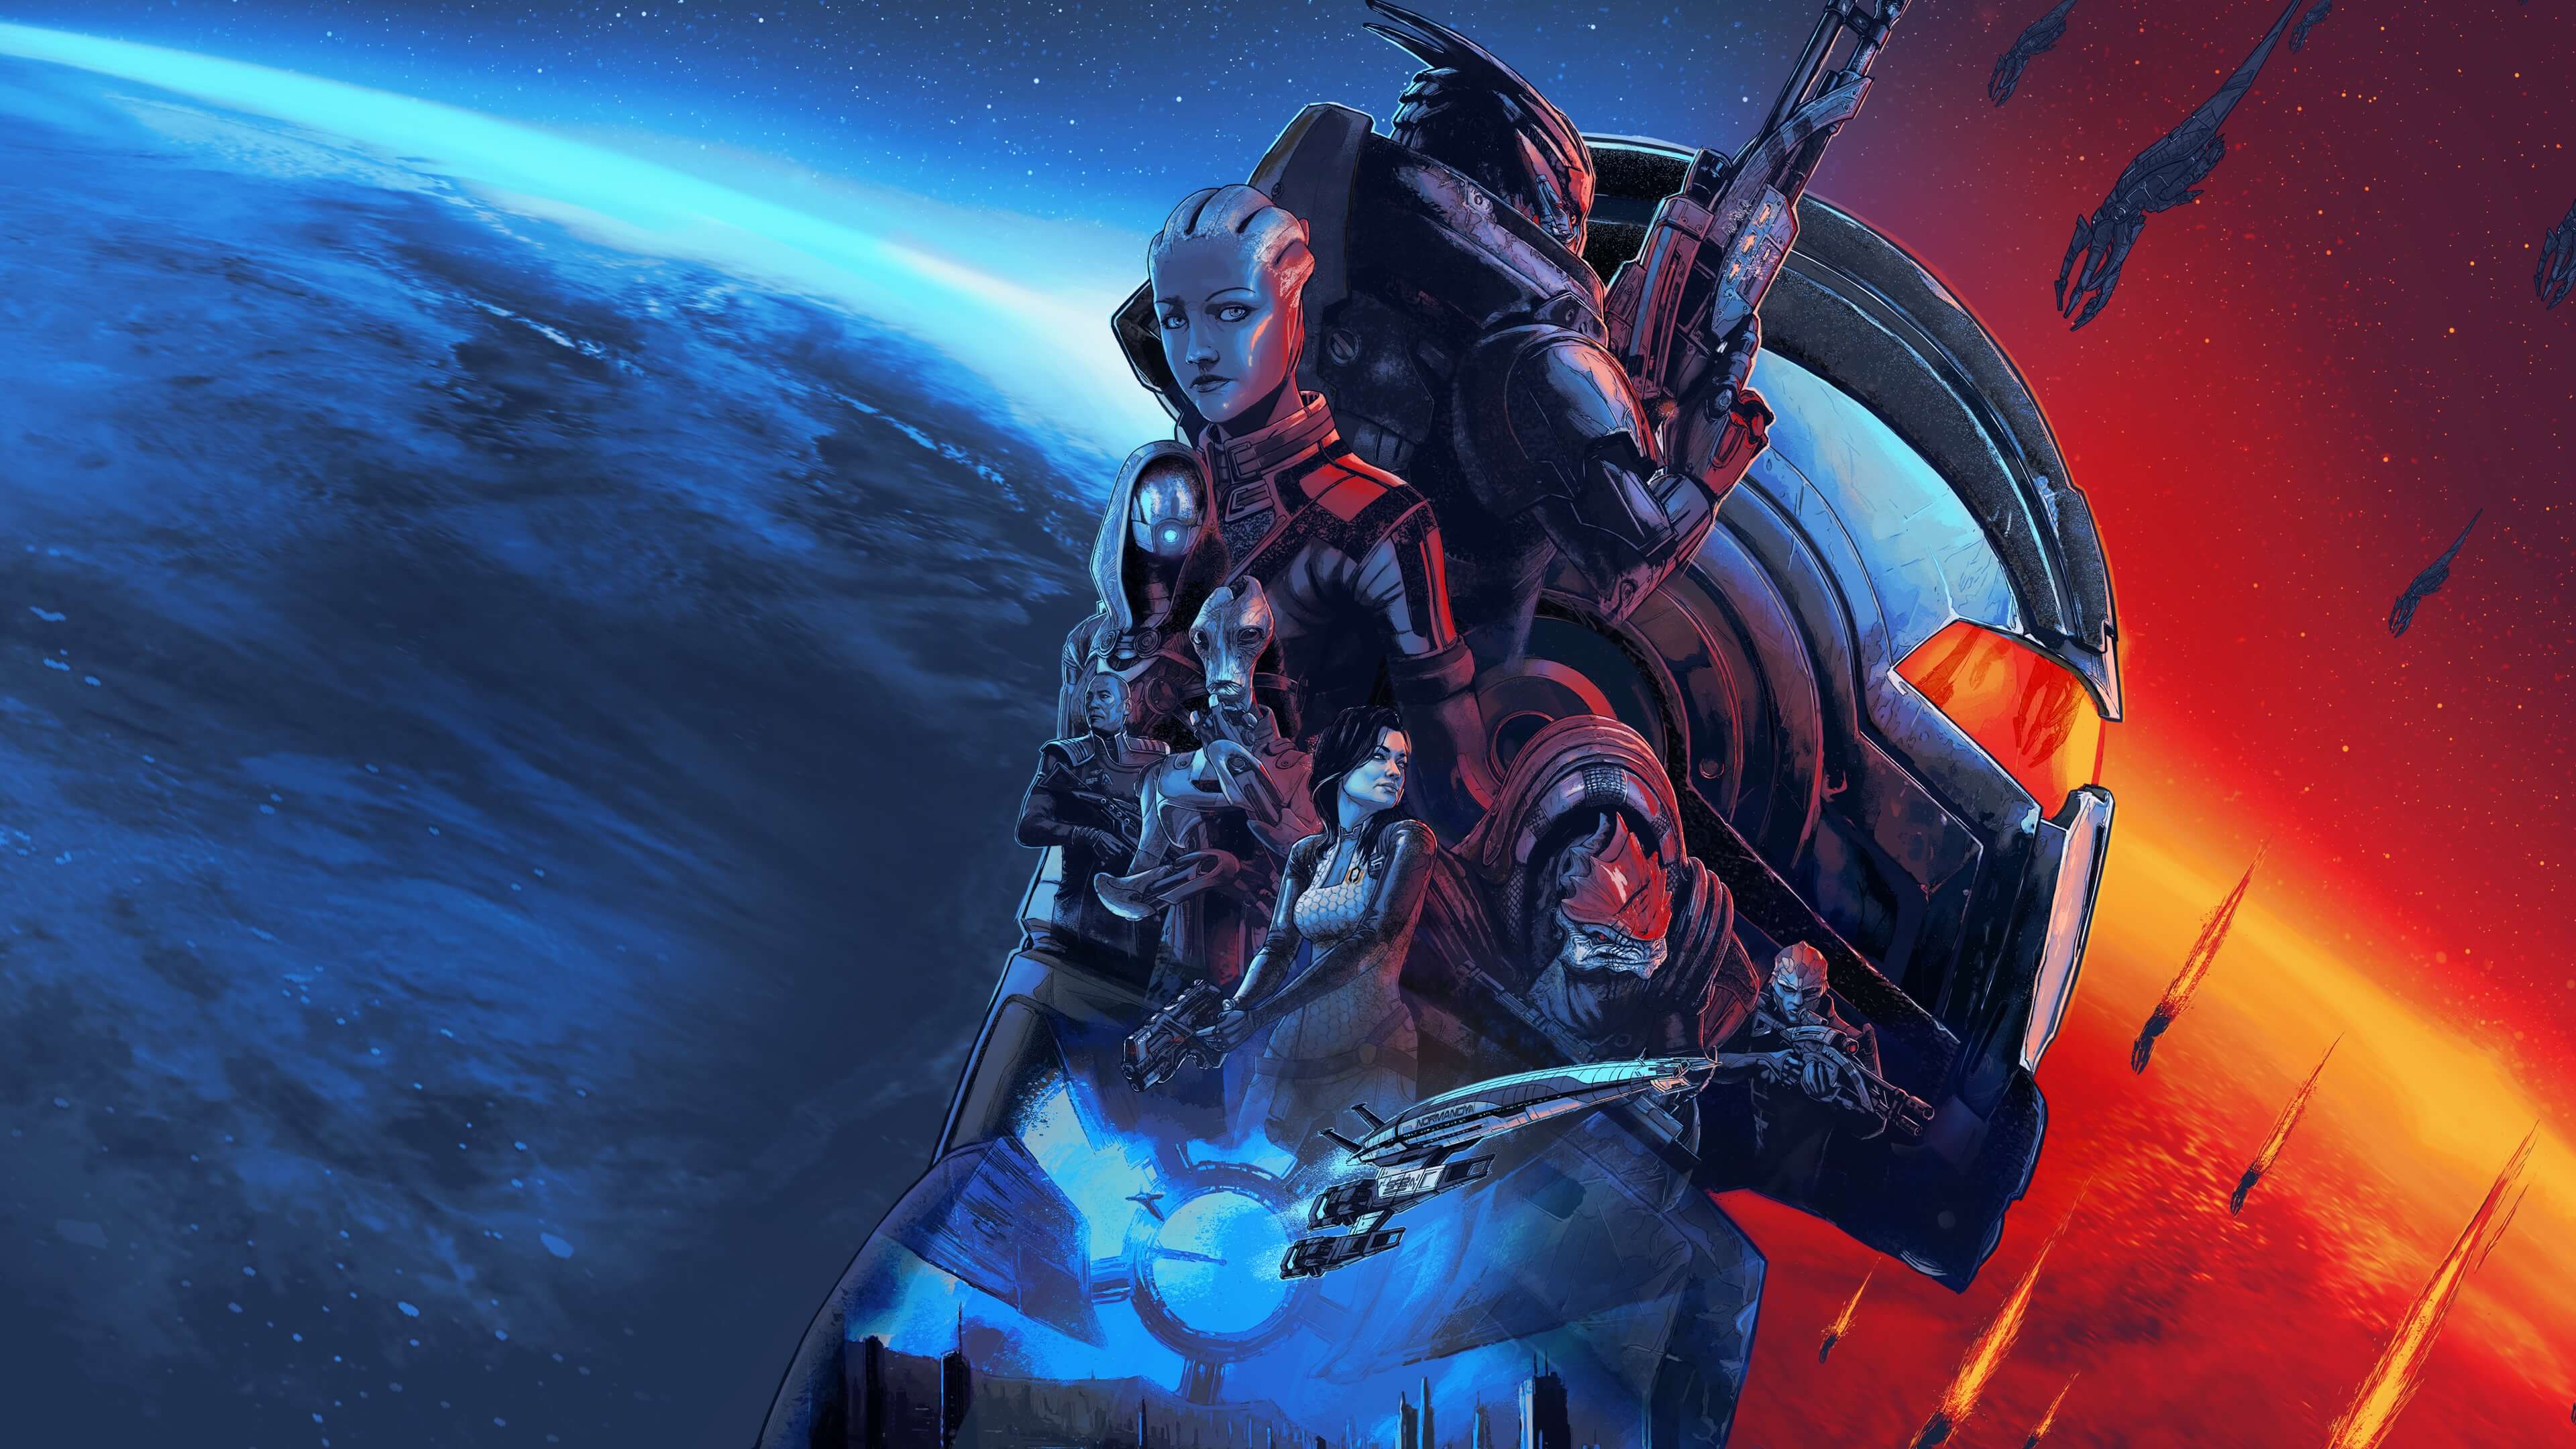 download the new version for ios Mass Effect™ издание Legendary